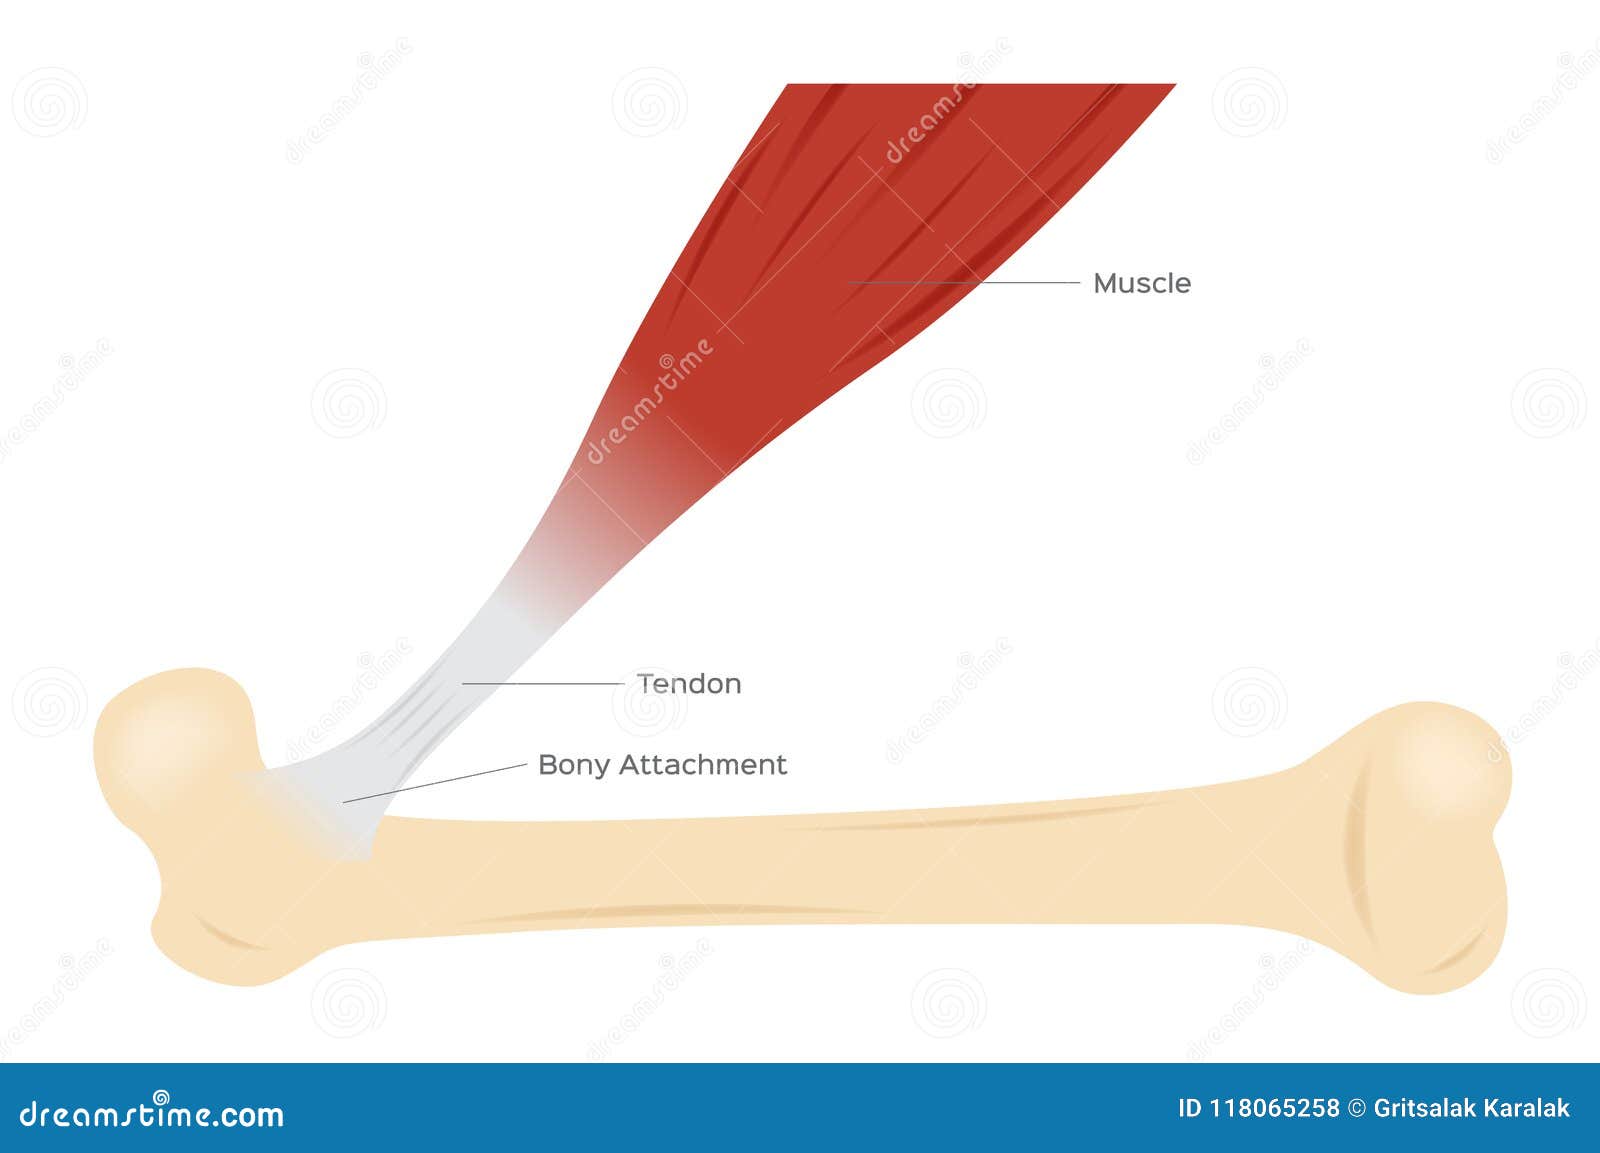 tendon muscle and bone anatomy